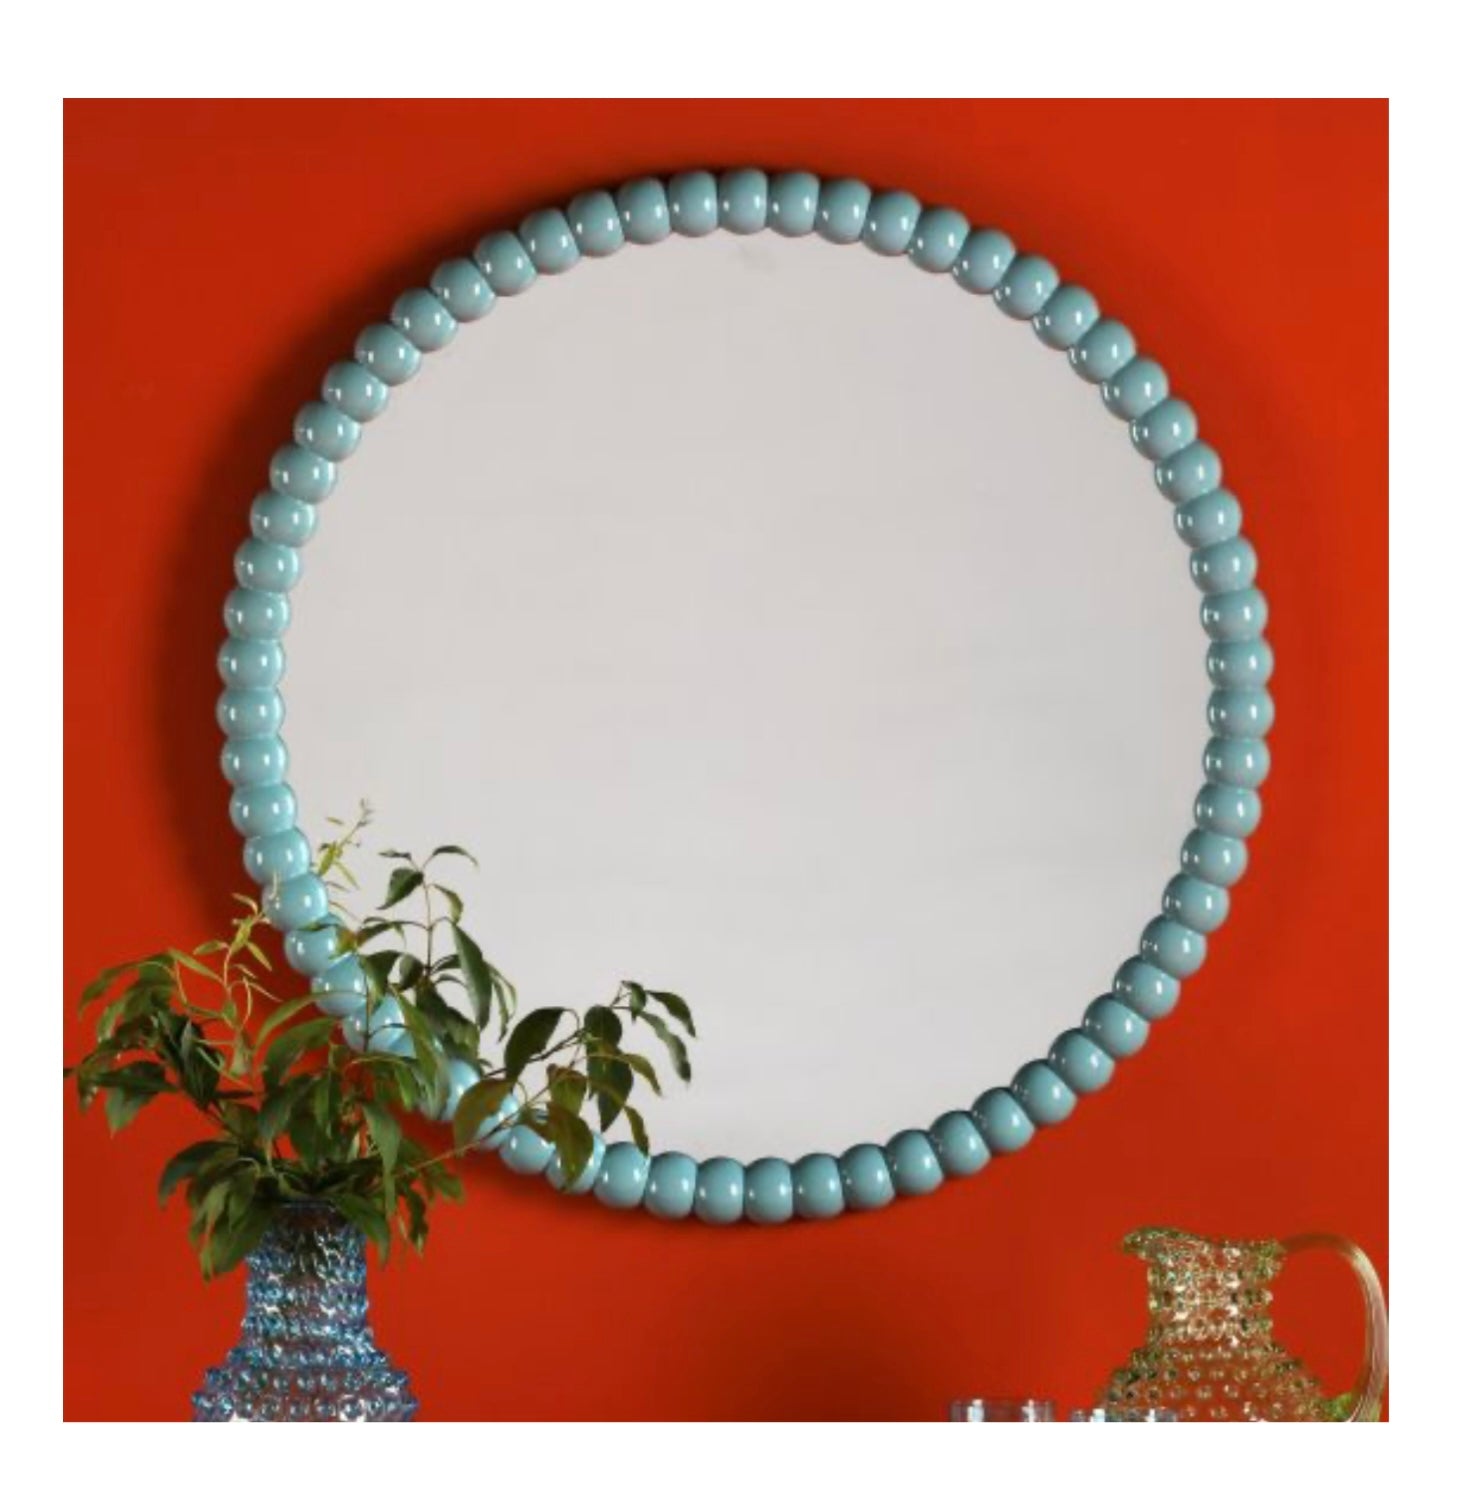 Ruan Round Mirror Blue 70cm